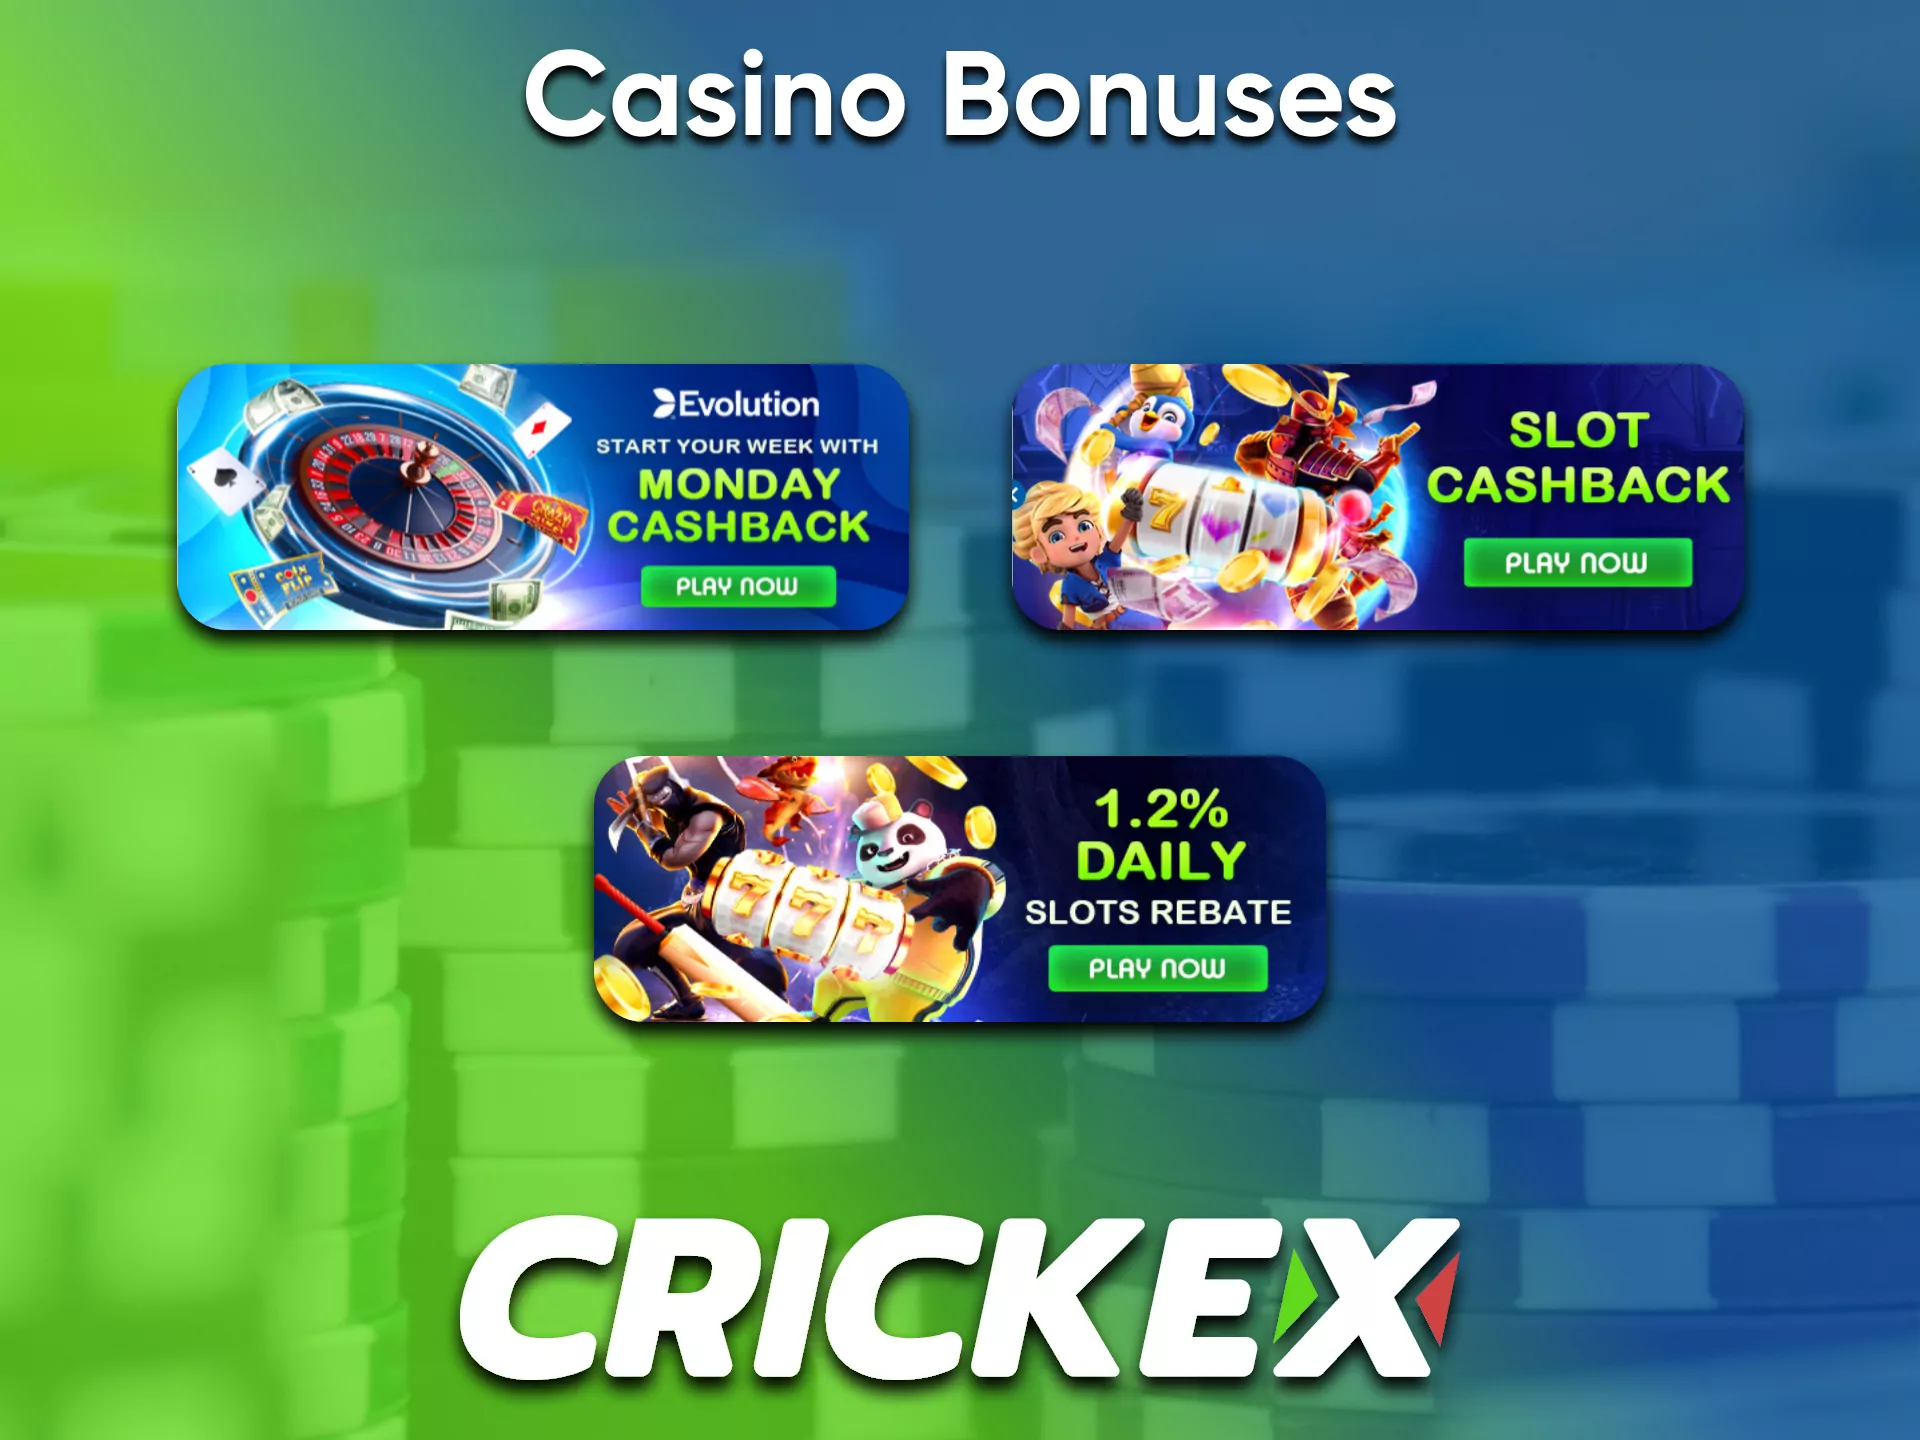 Make a deposit to get different bonuses Crickex casino.